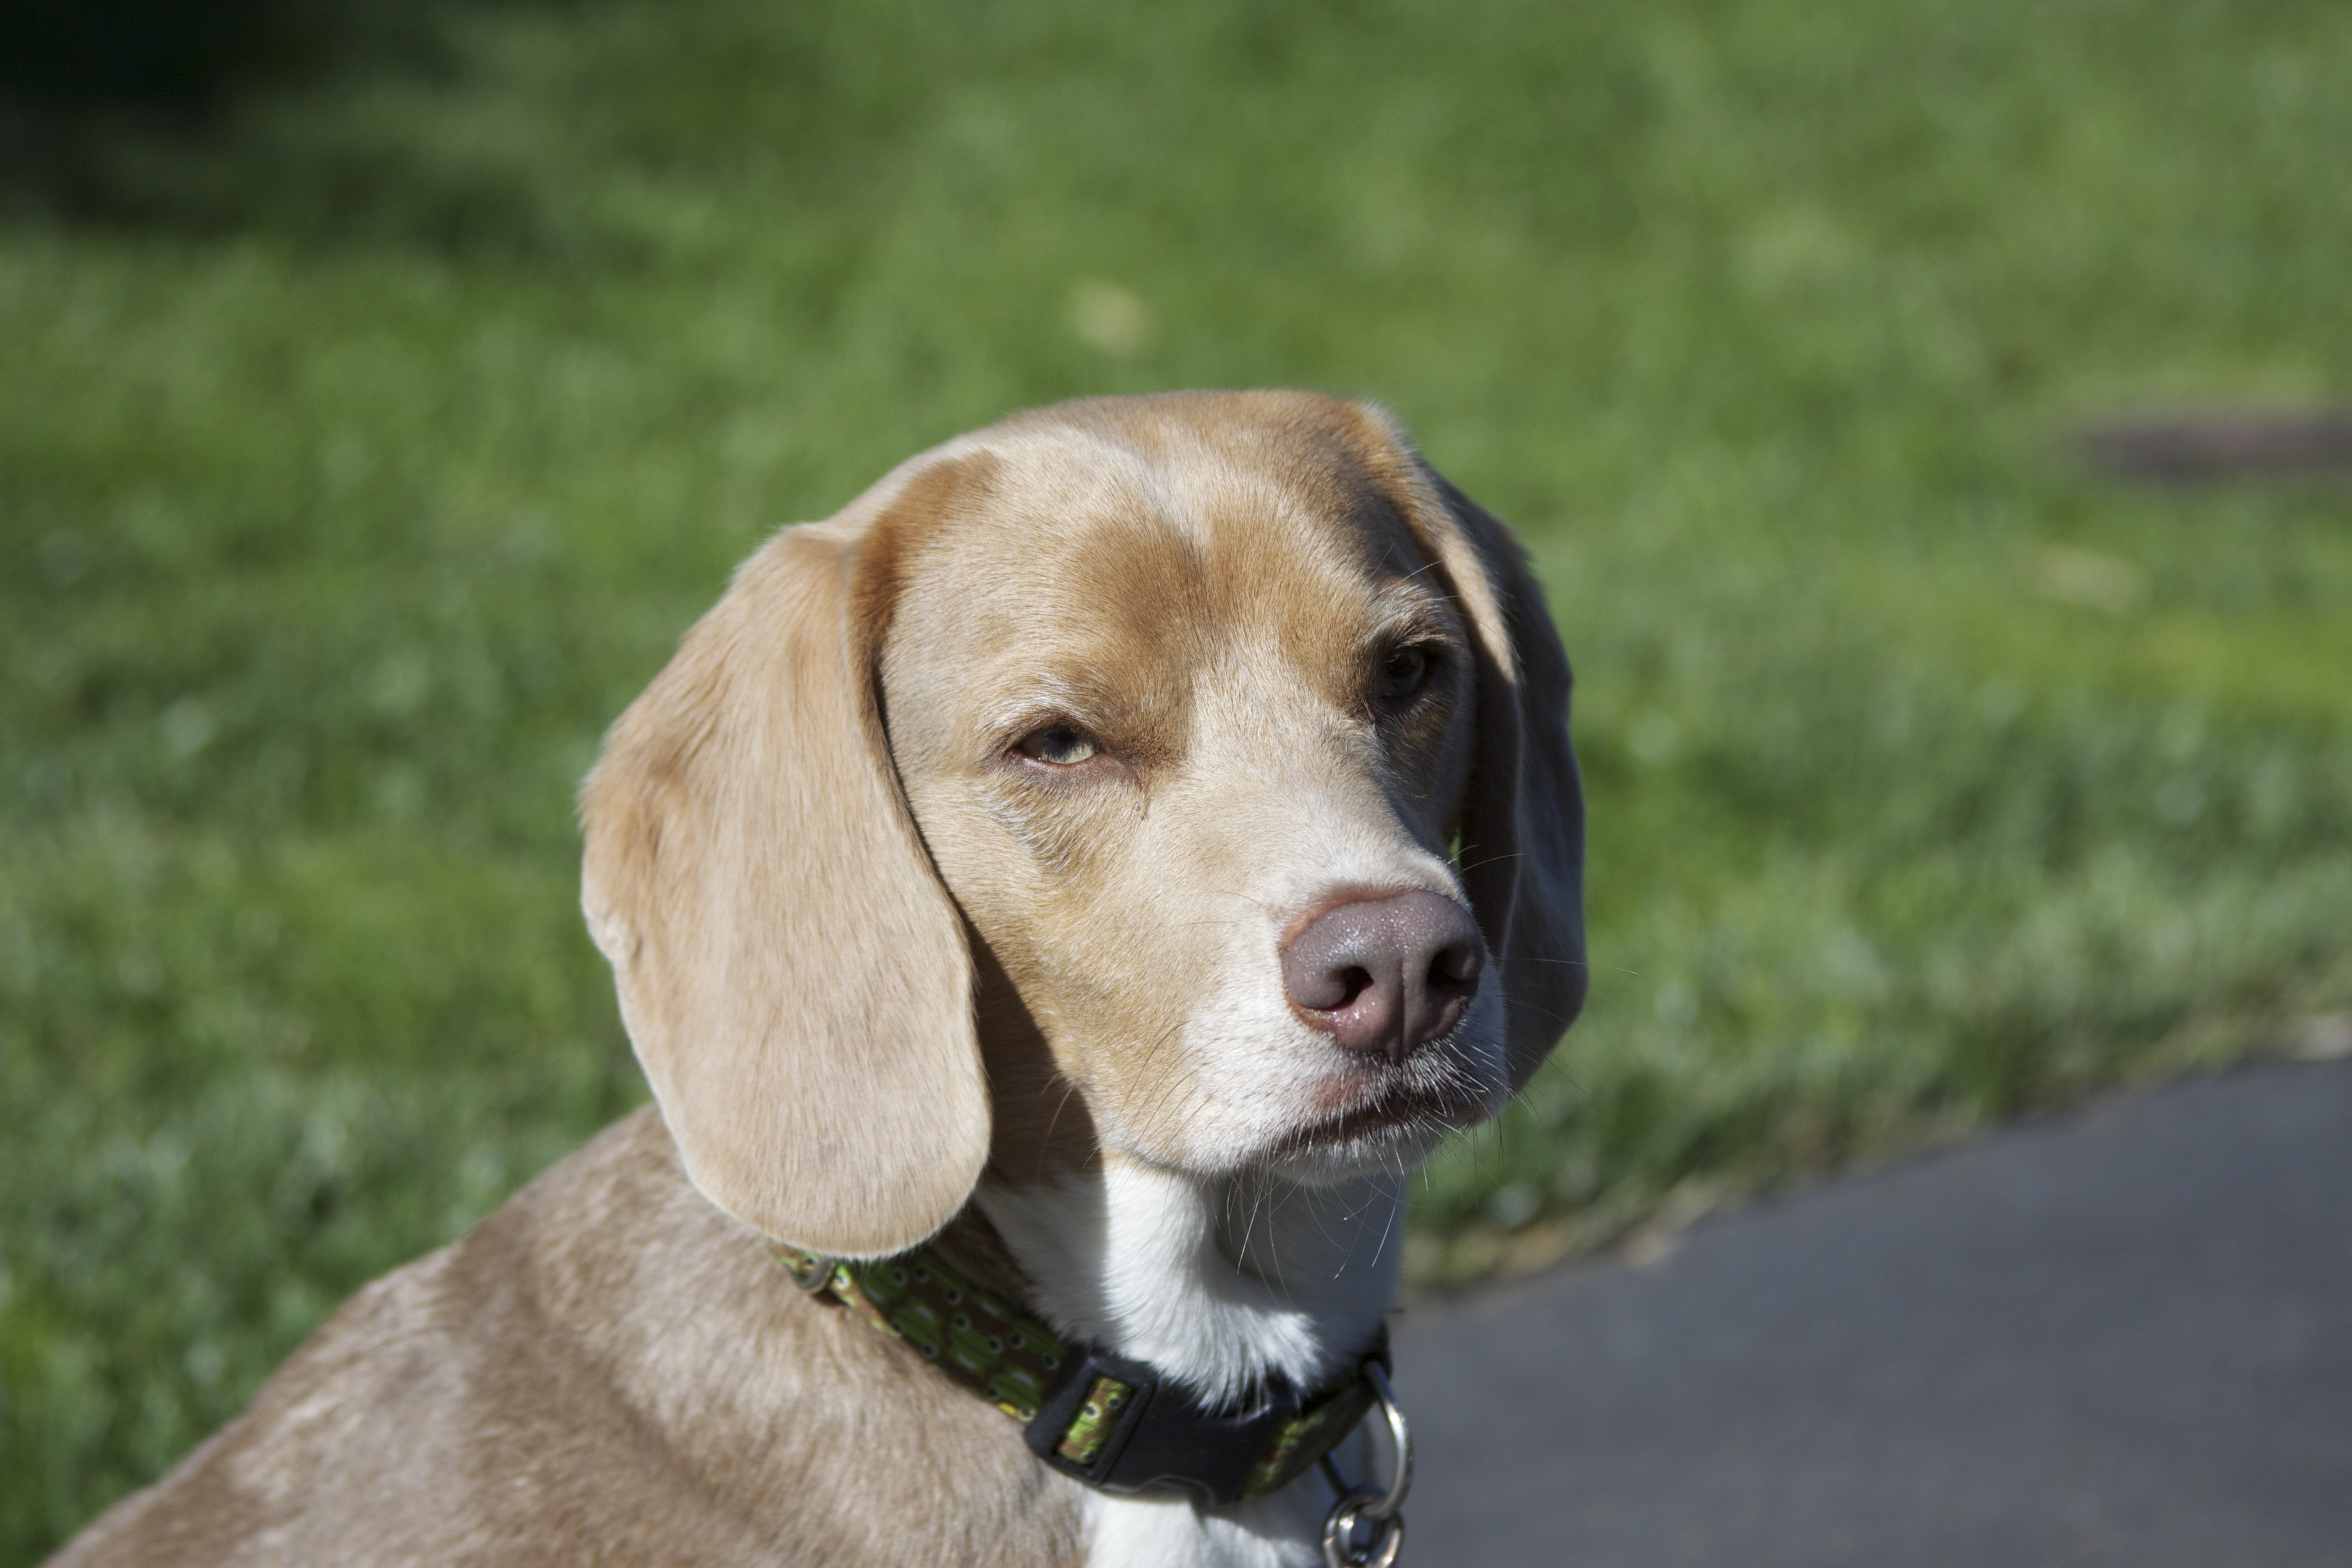 Dubious Lilac/Khaki Beagle